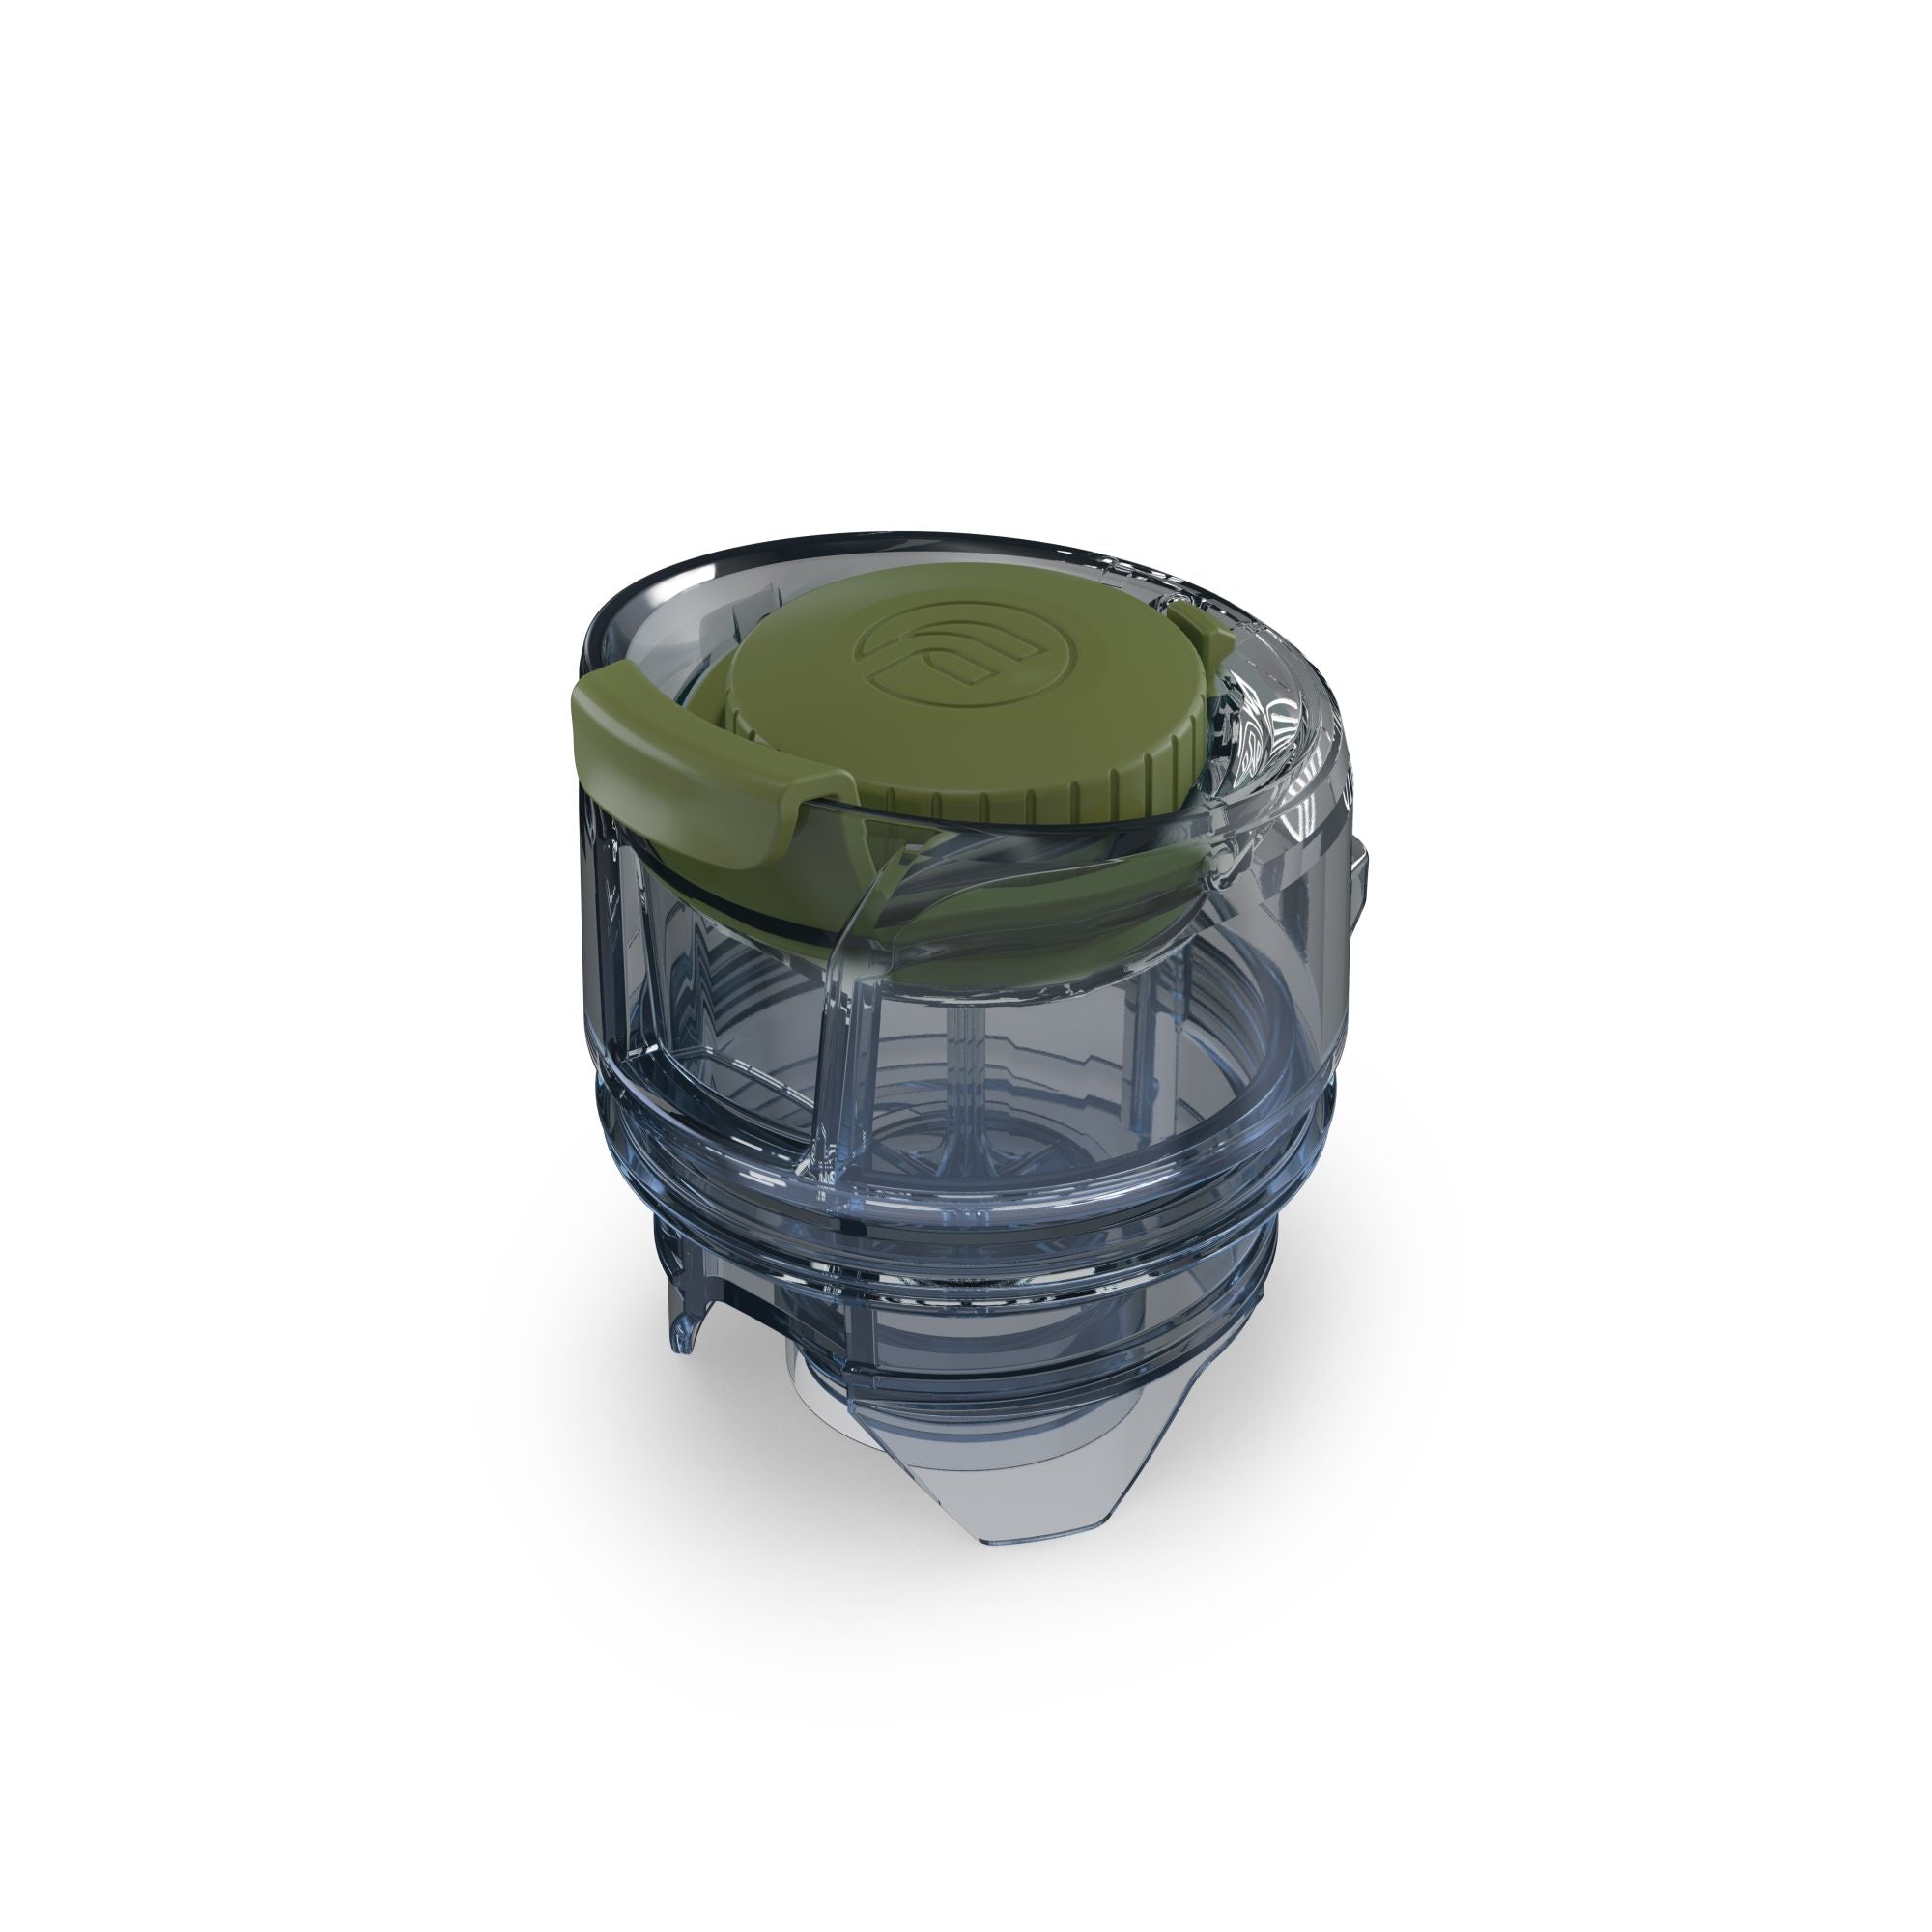 Flaskap Volst 30 Insulated Tumbler with Standard Lid, Keeps Blazin Green